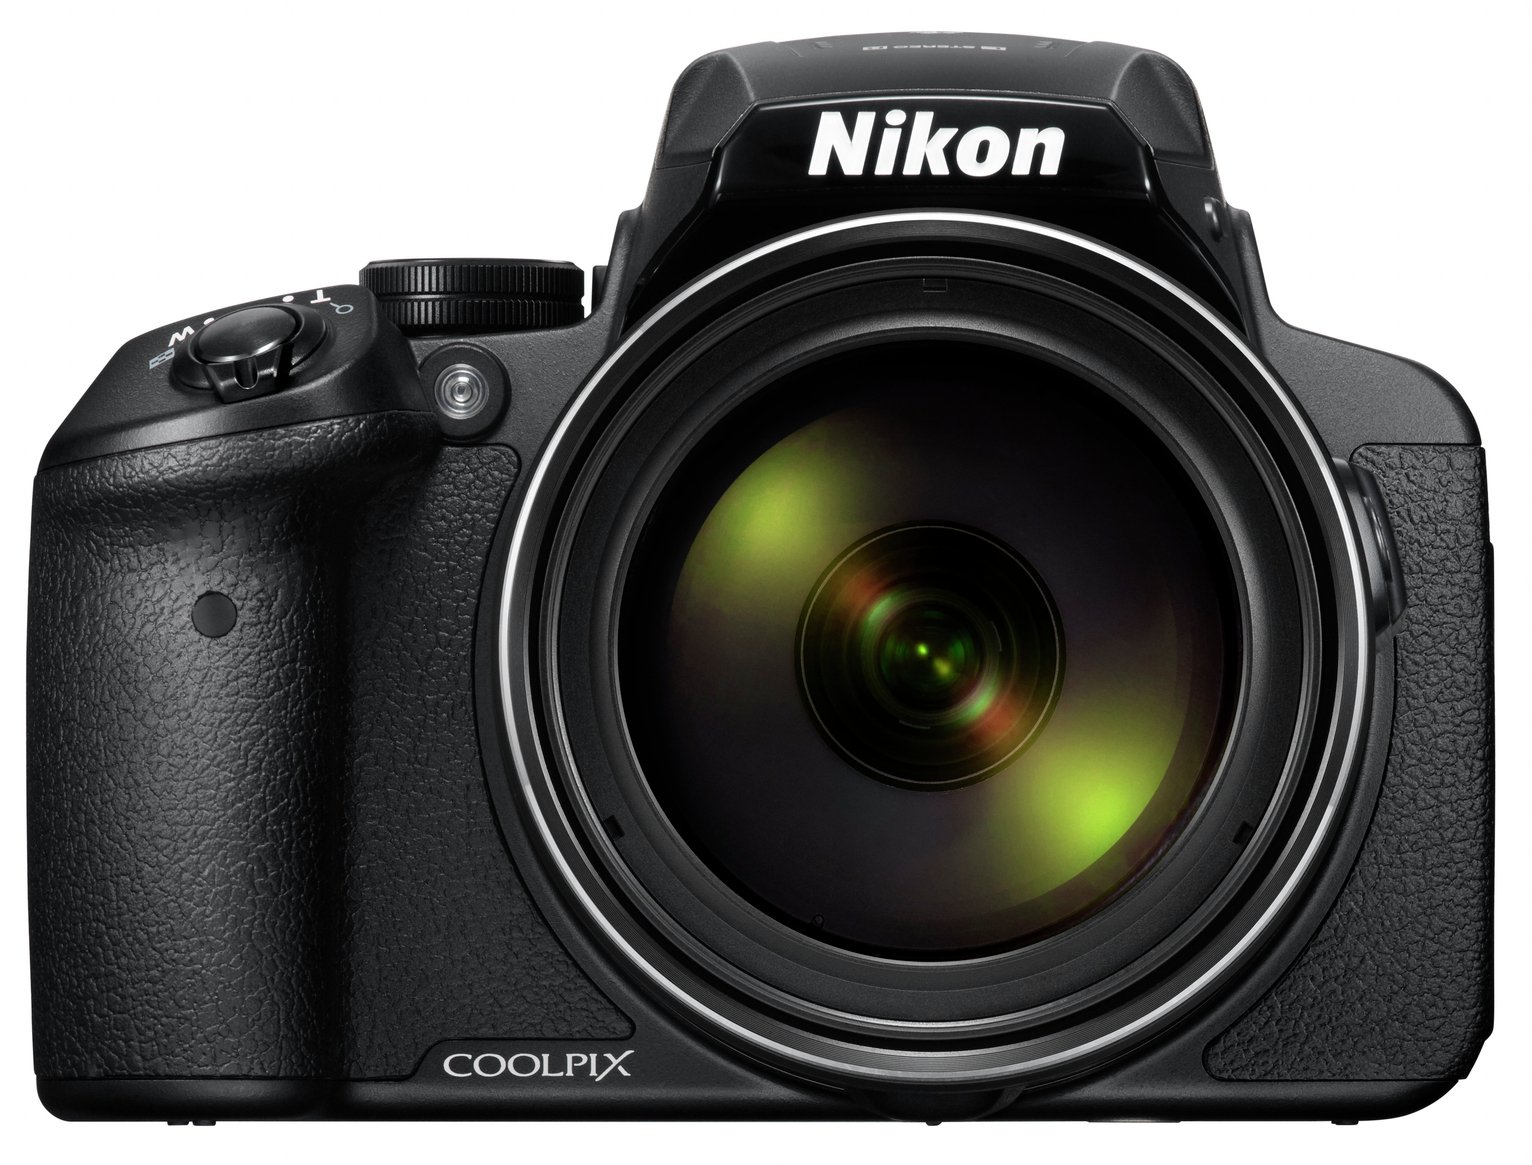 Nikon Coolpix P900 Bridge Camera Review